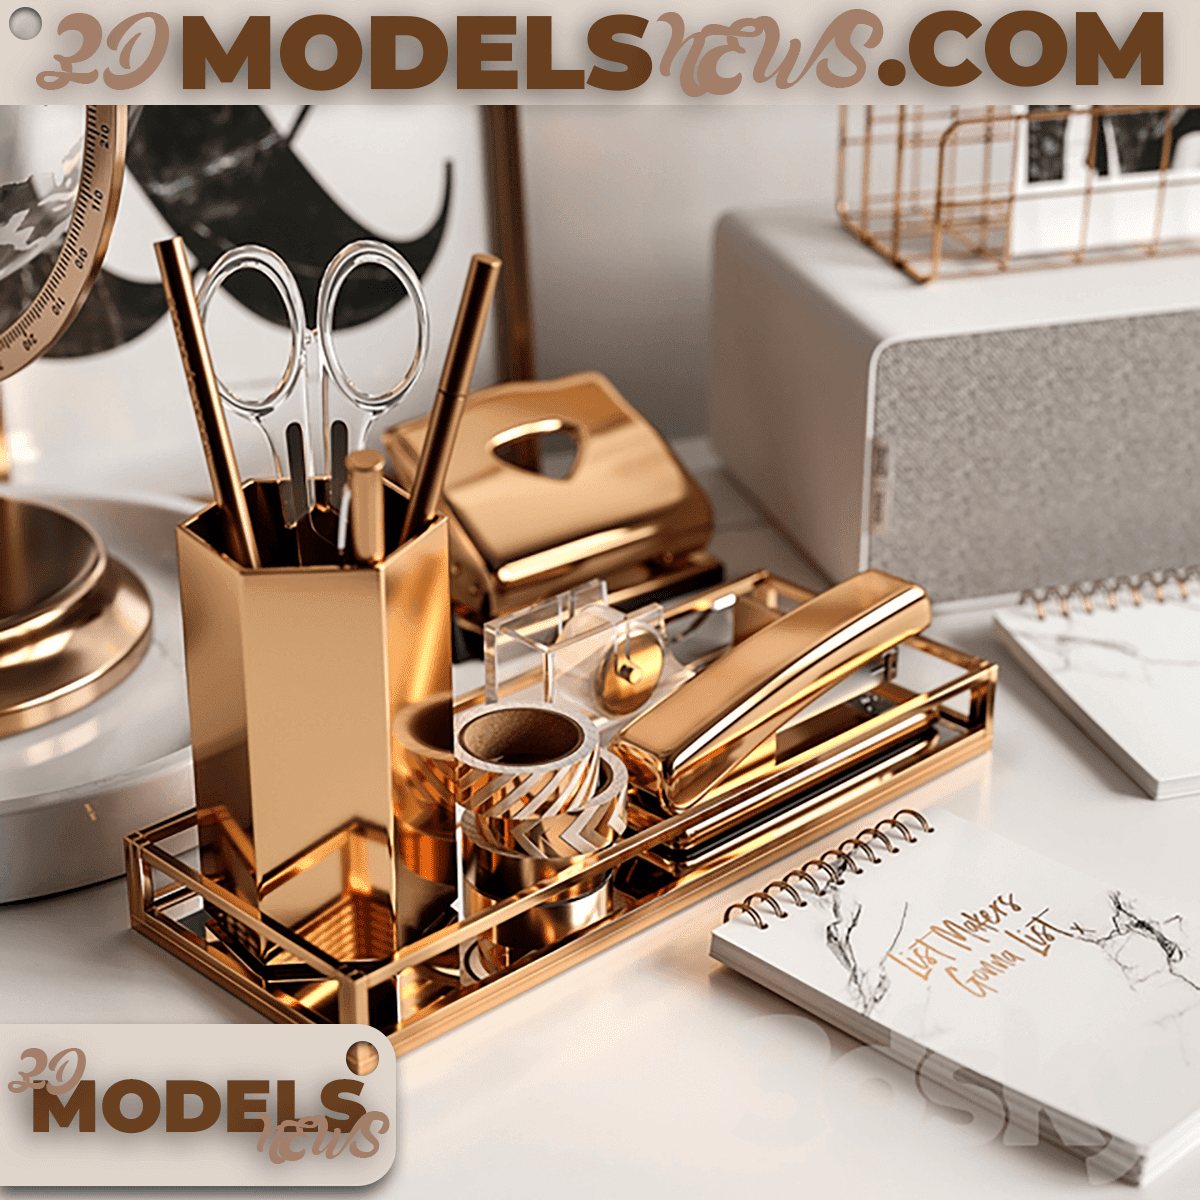 Designers Workplace Model 4